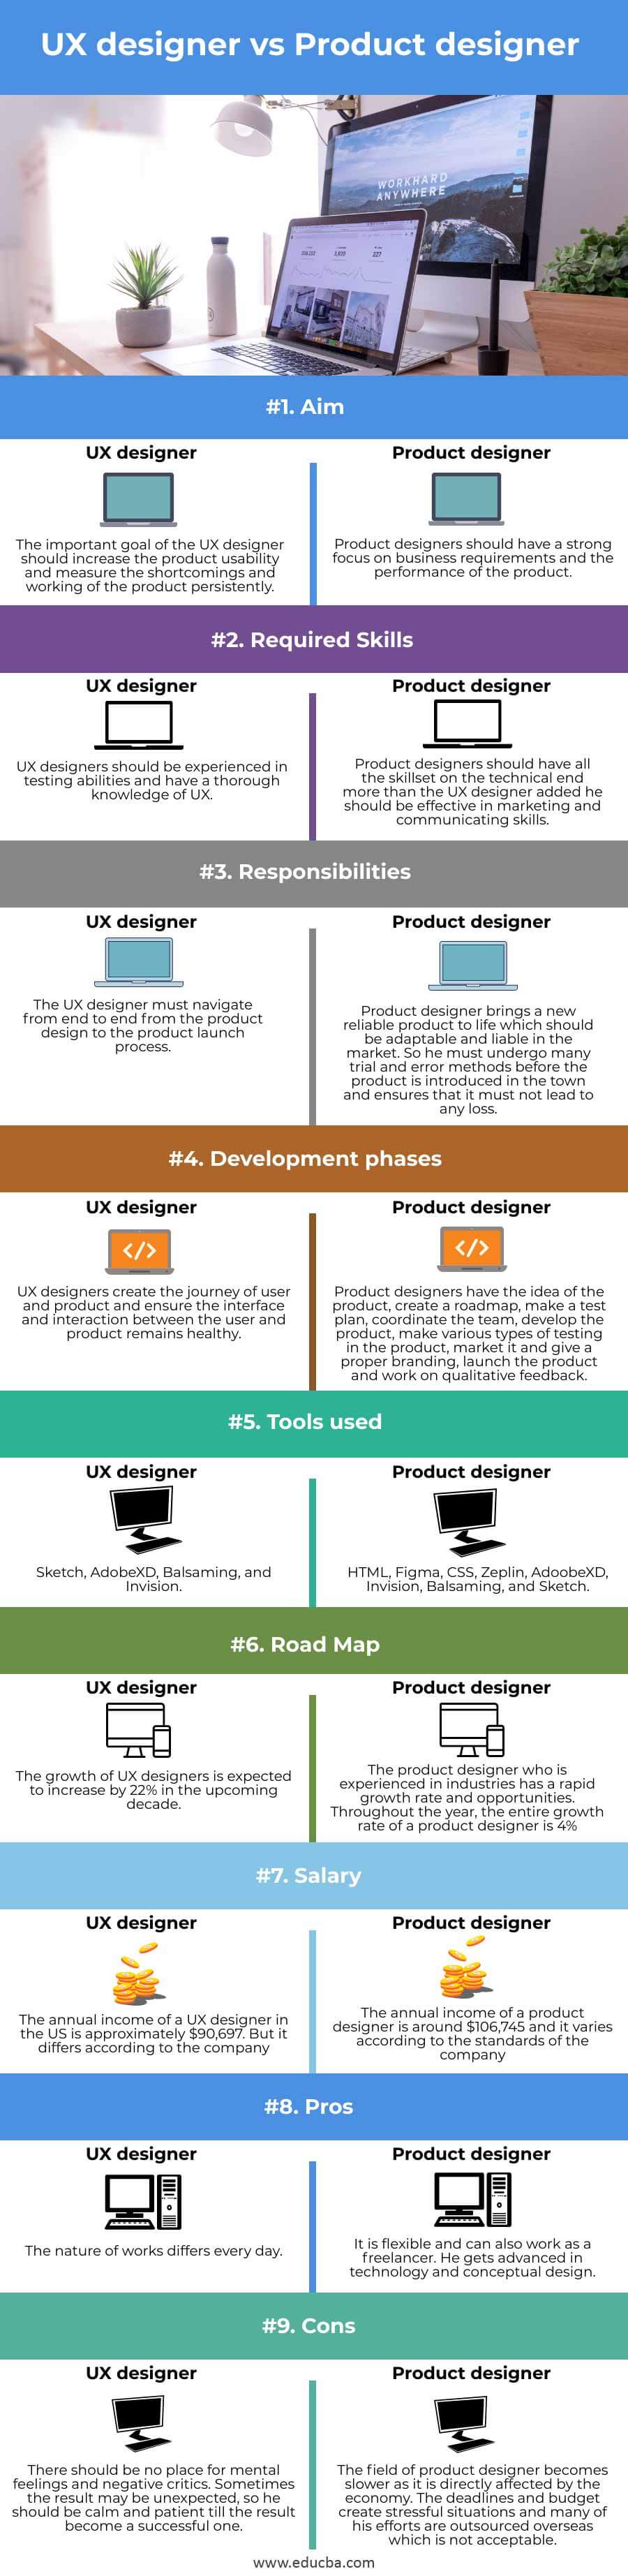 UX-designer-vs-Product-designer-info